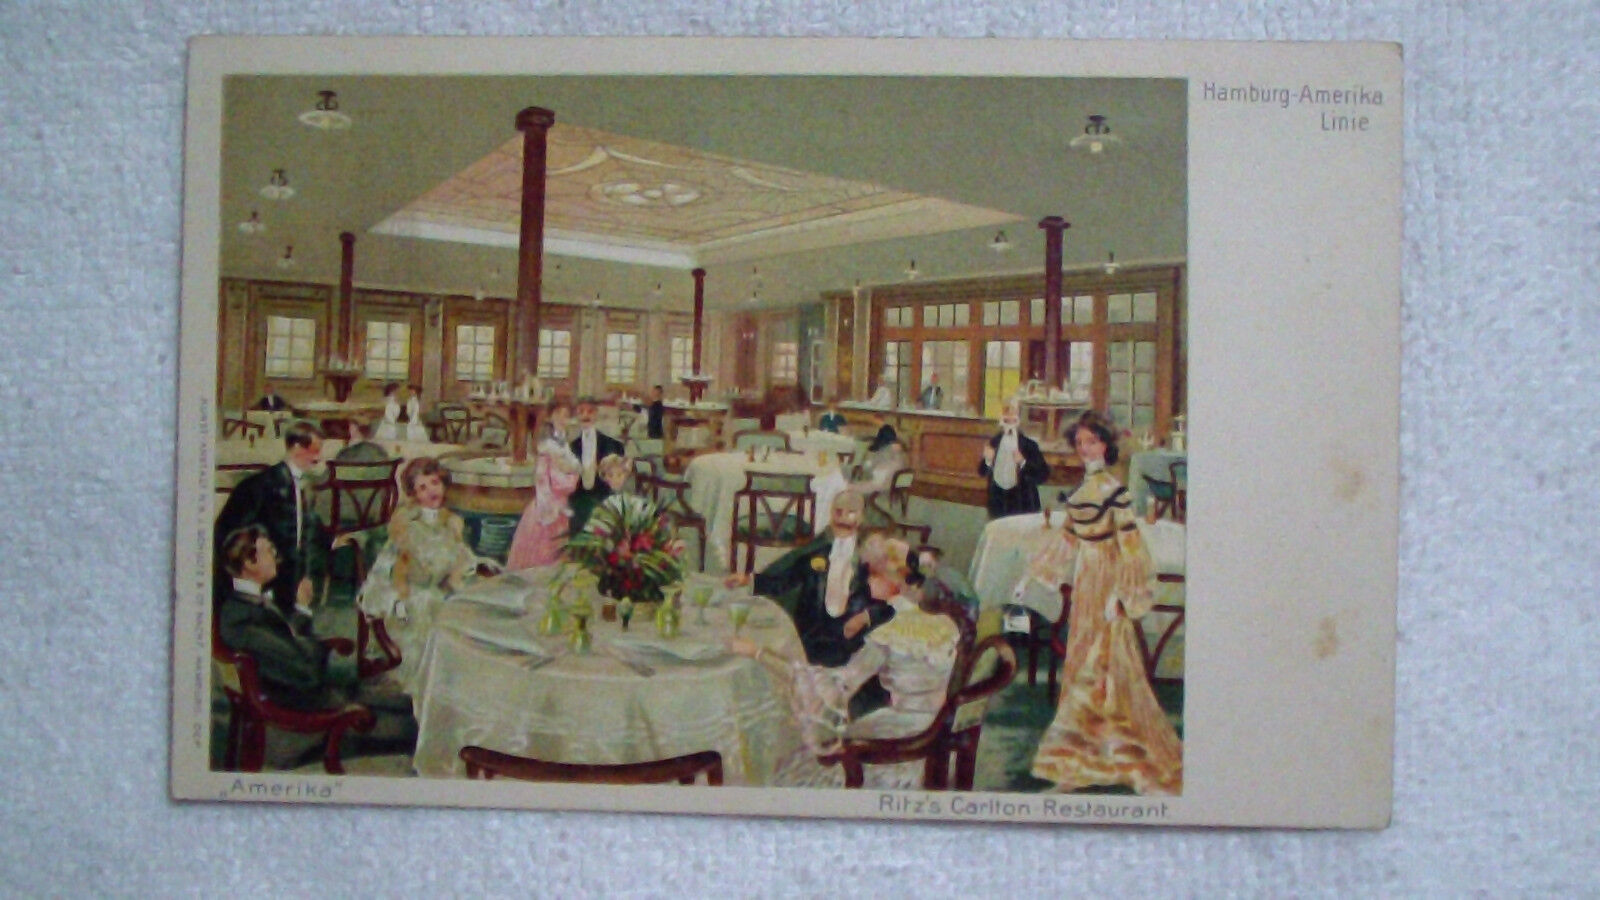 Vintage Postcard Hamburg Amerika Linie Ritz\'s Carlton Restaurant Circa 1920